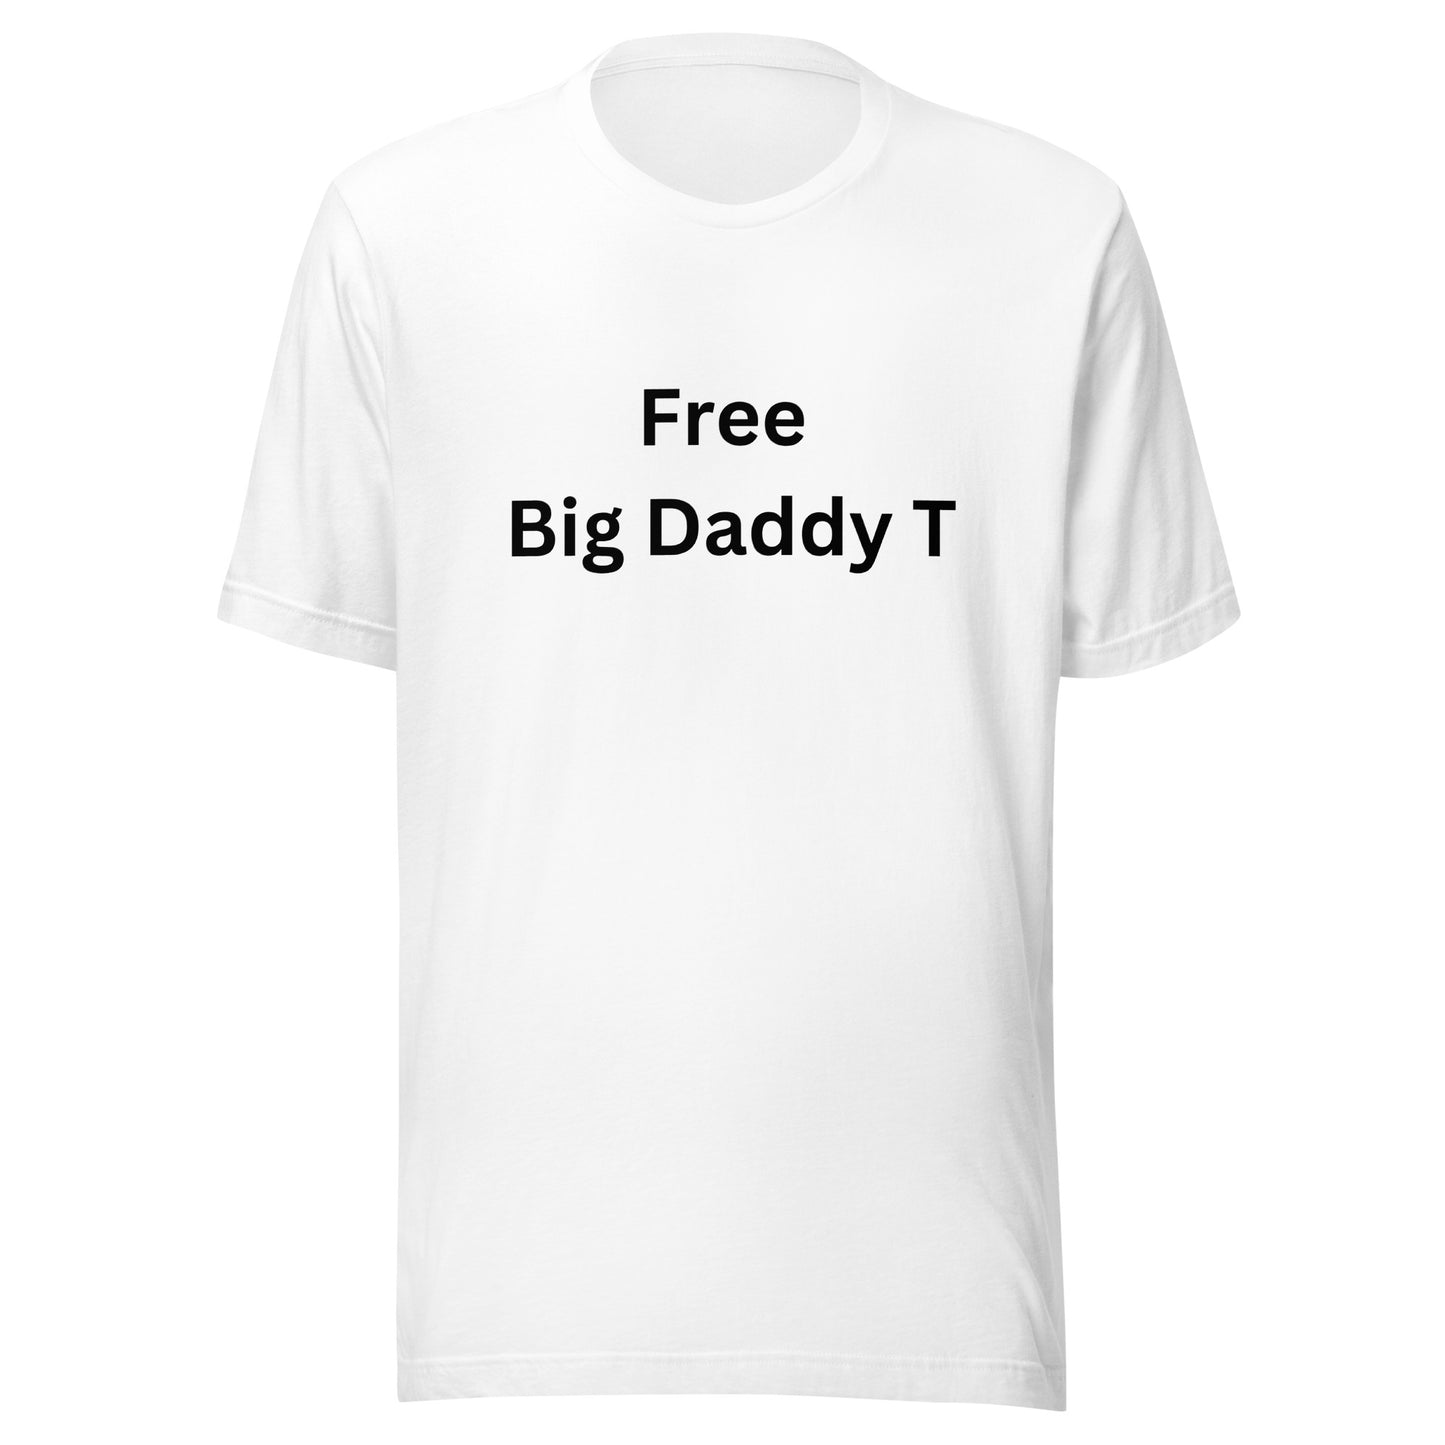 Free Big Daddy T T-Shirt